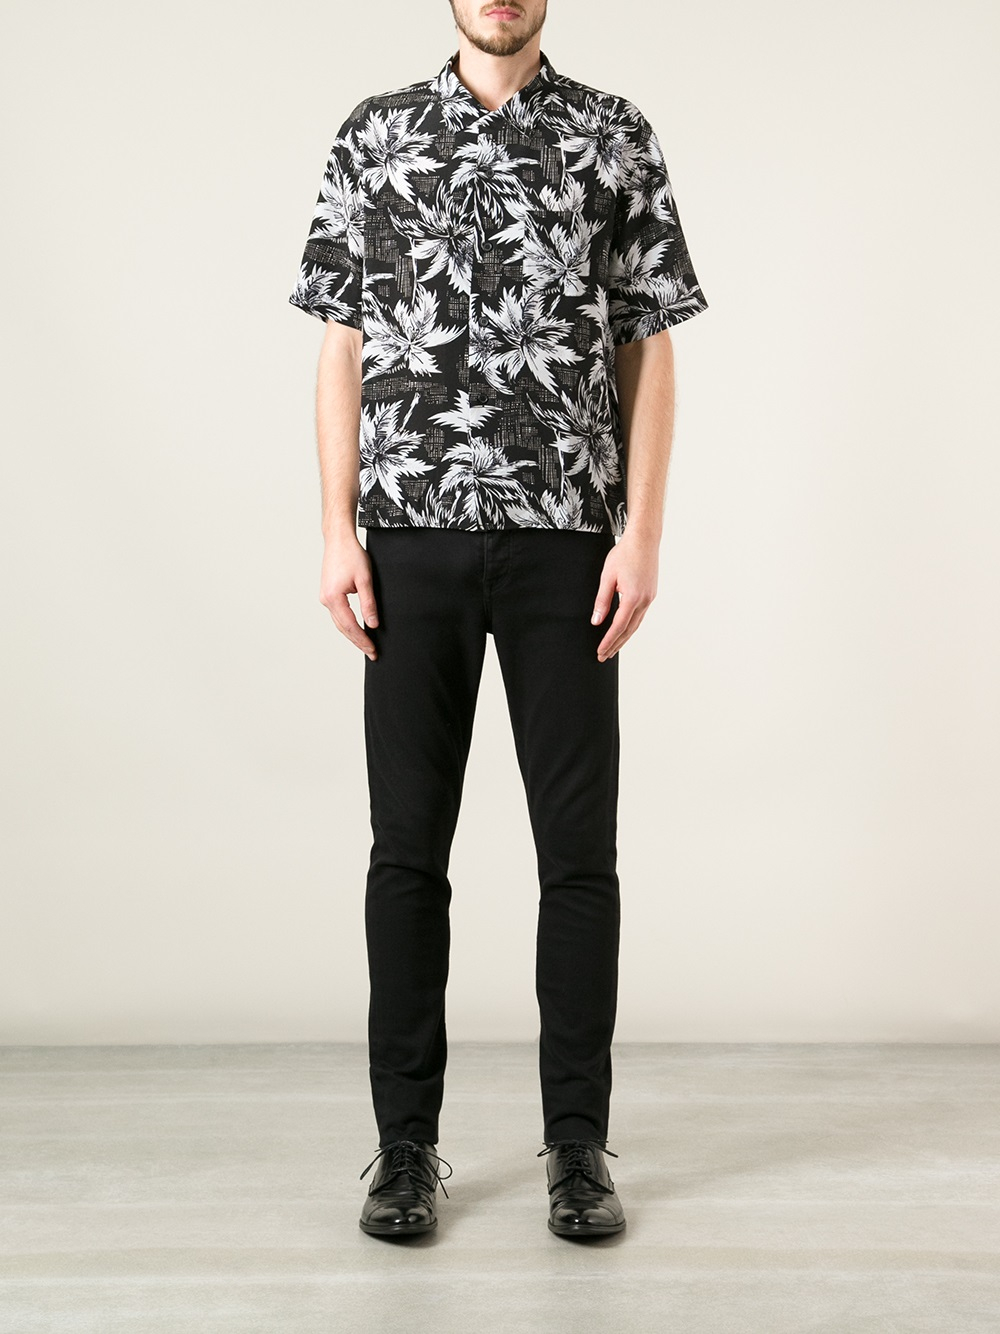 Saint Laurent Hawaiian Flower Printed Shirt in Black for Men - Lyst